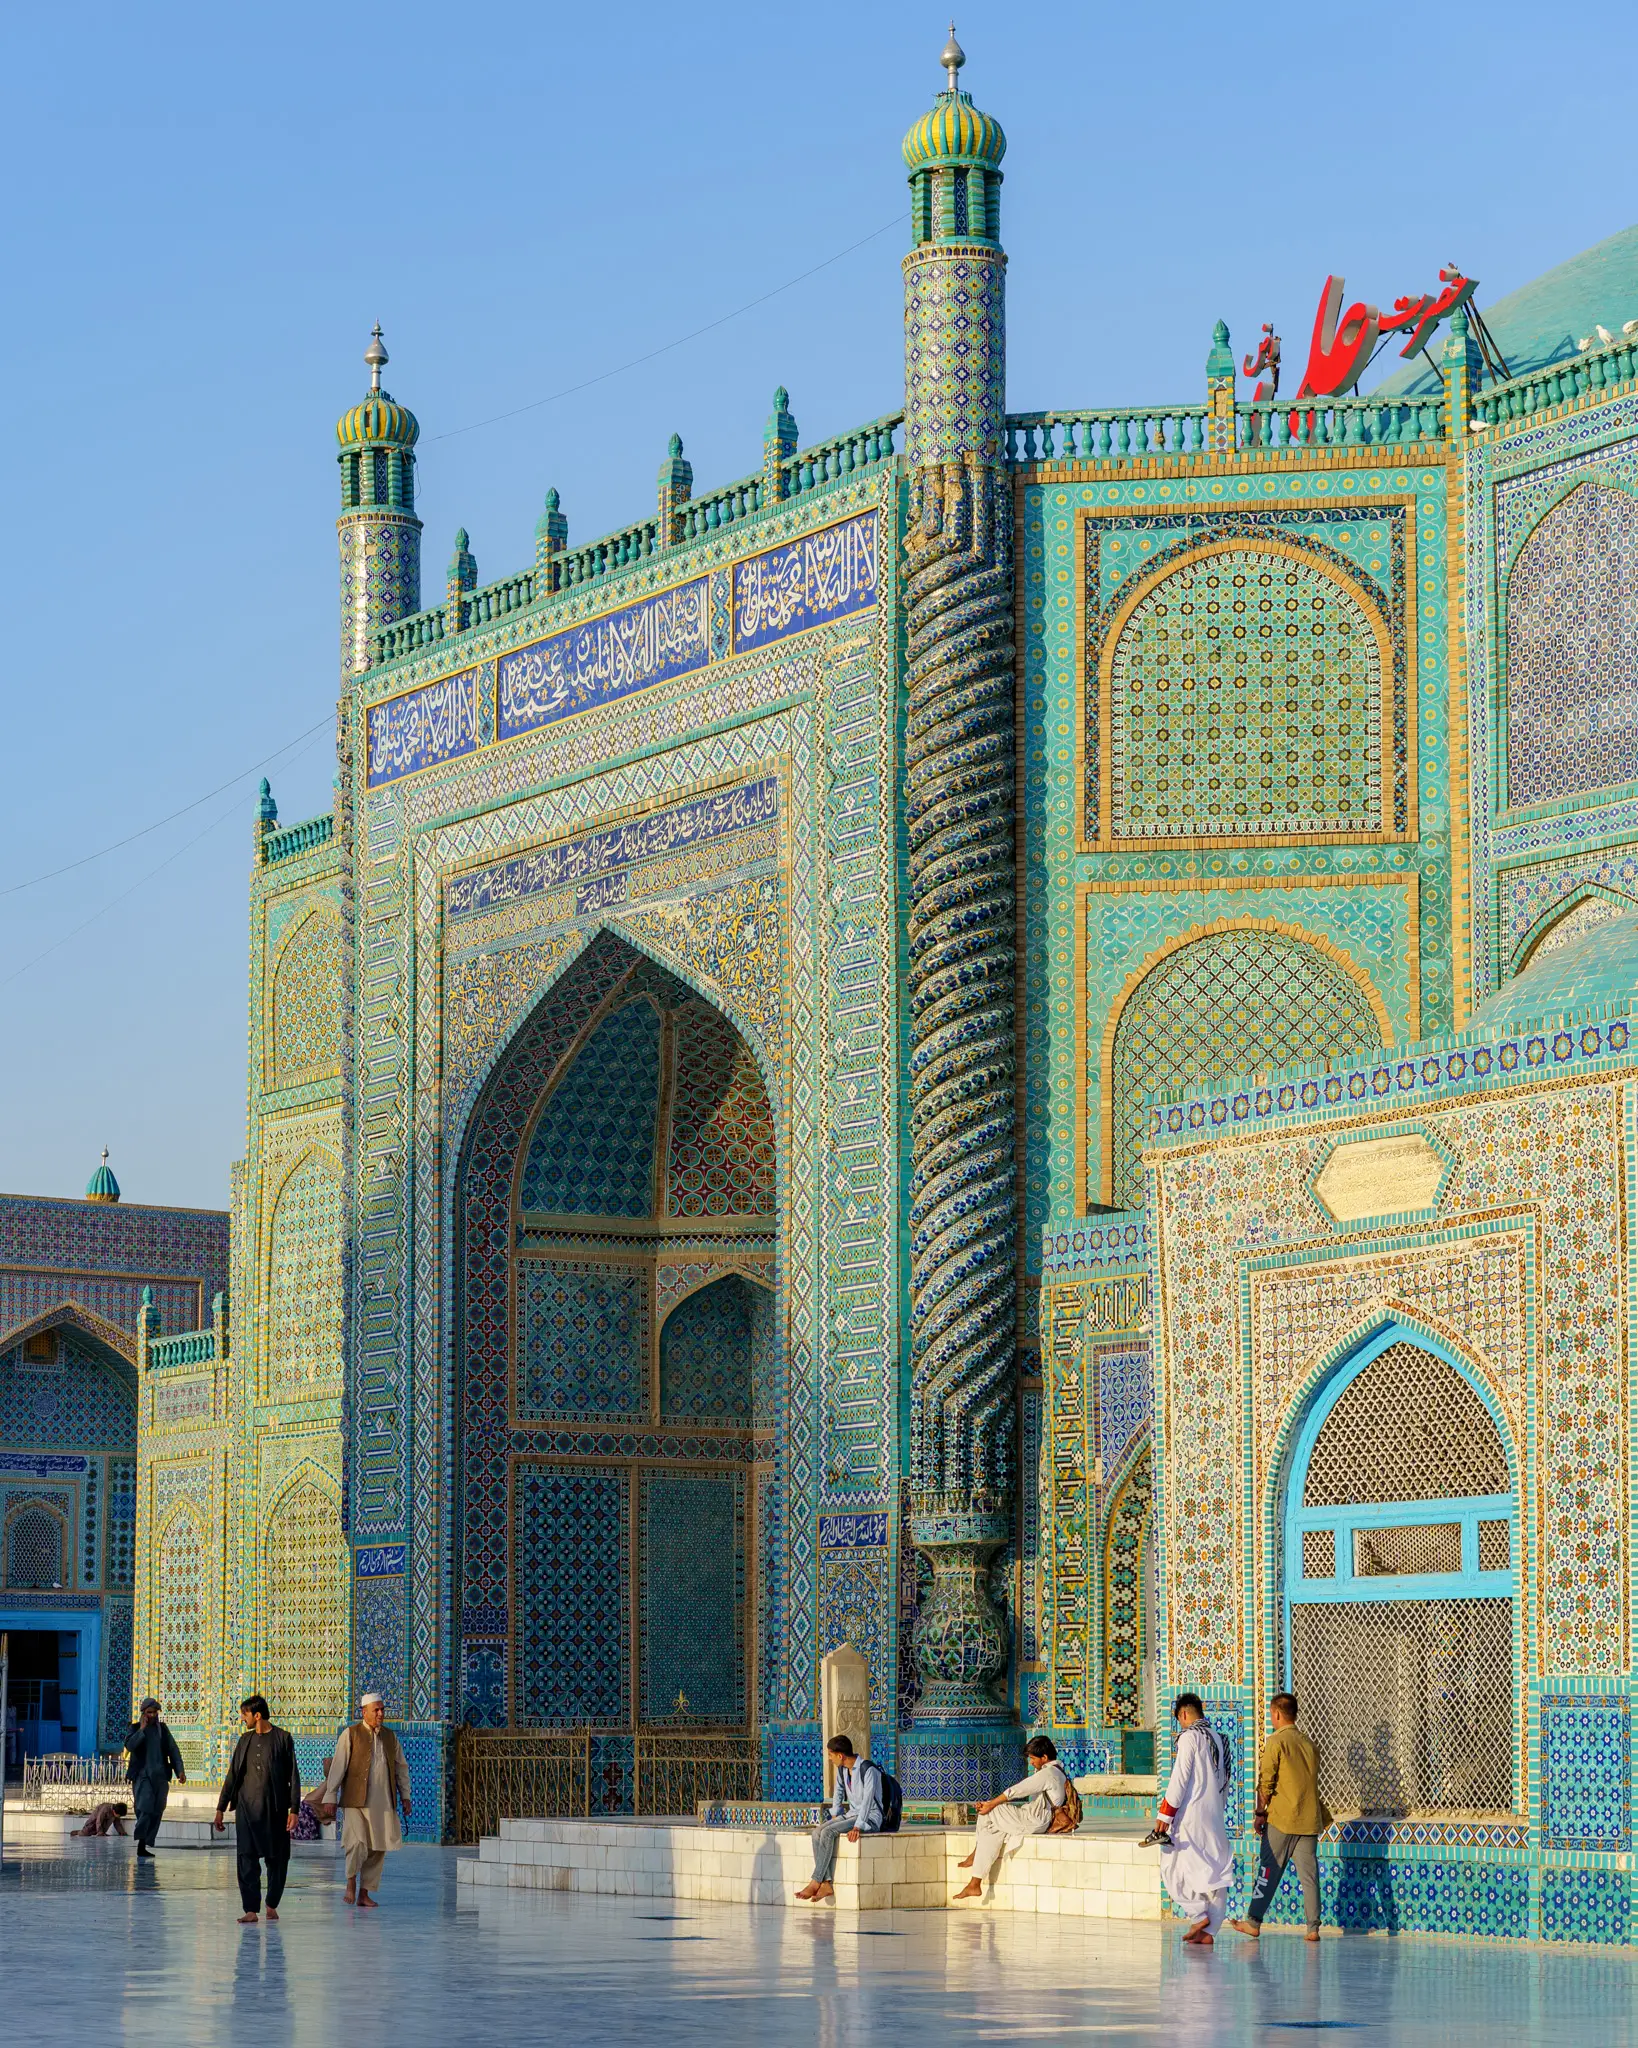 The Shrine of Hazrat Ali in Mazar-e-Sharif